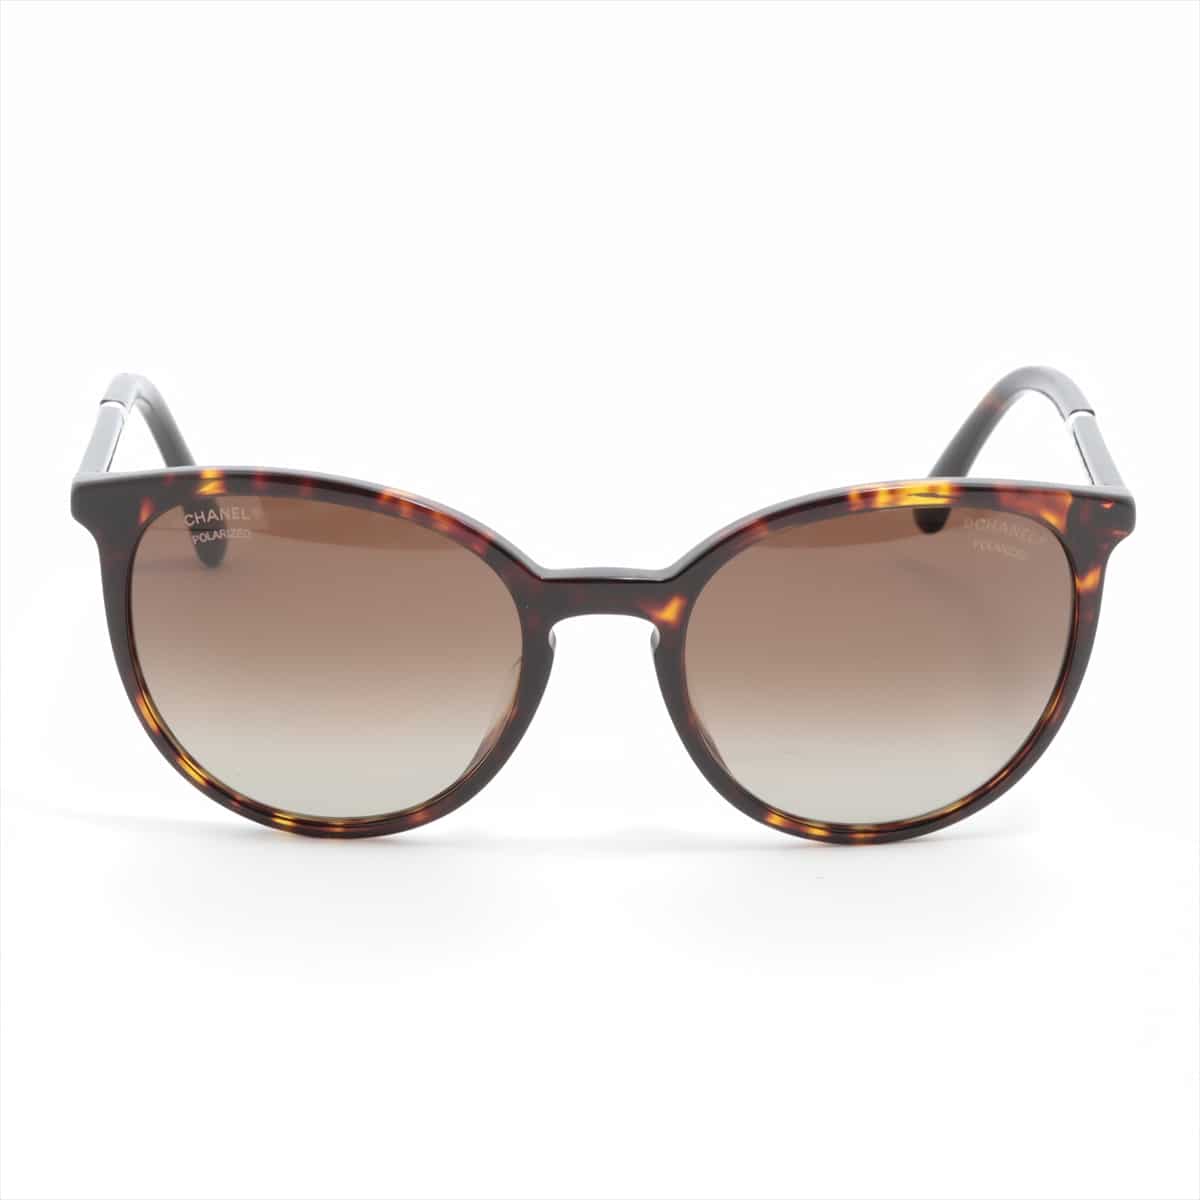 Chanel 5394 Sunglasses Plastic Brown